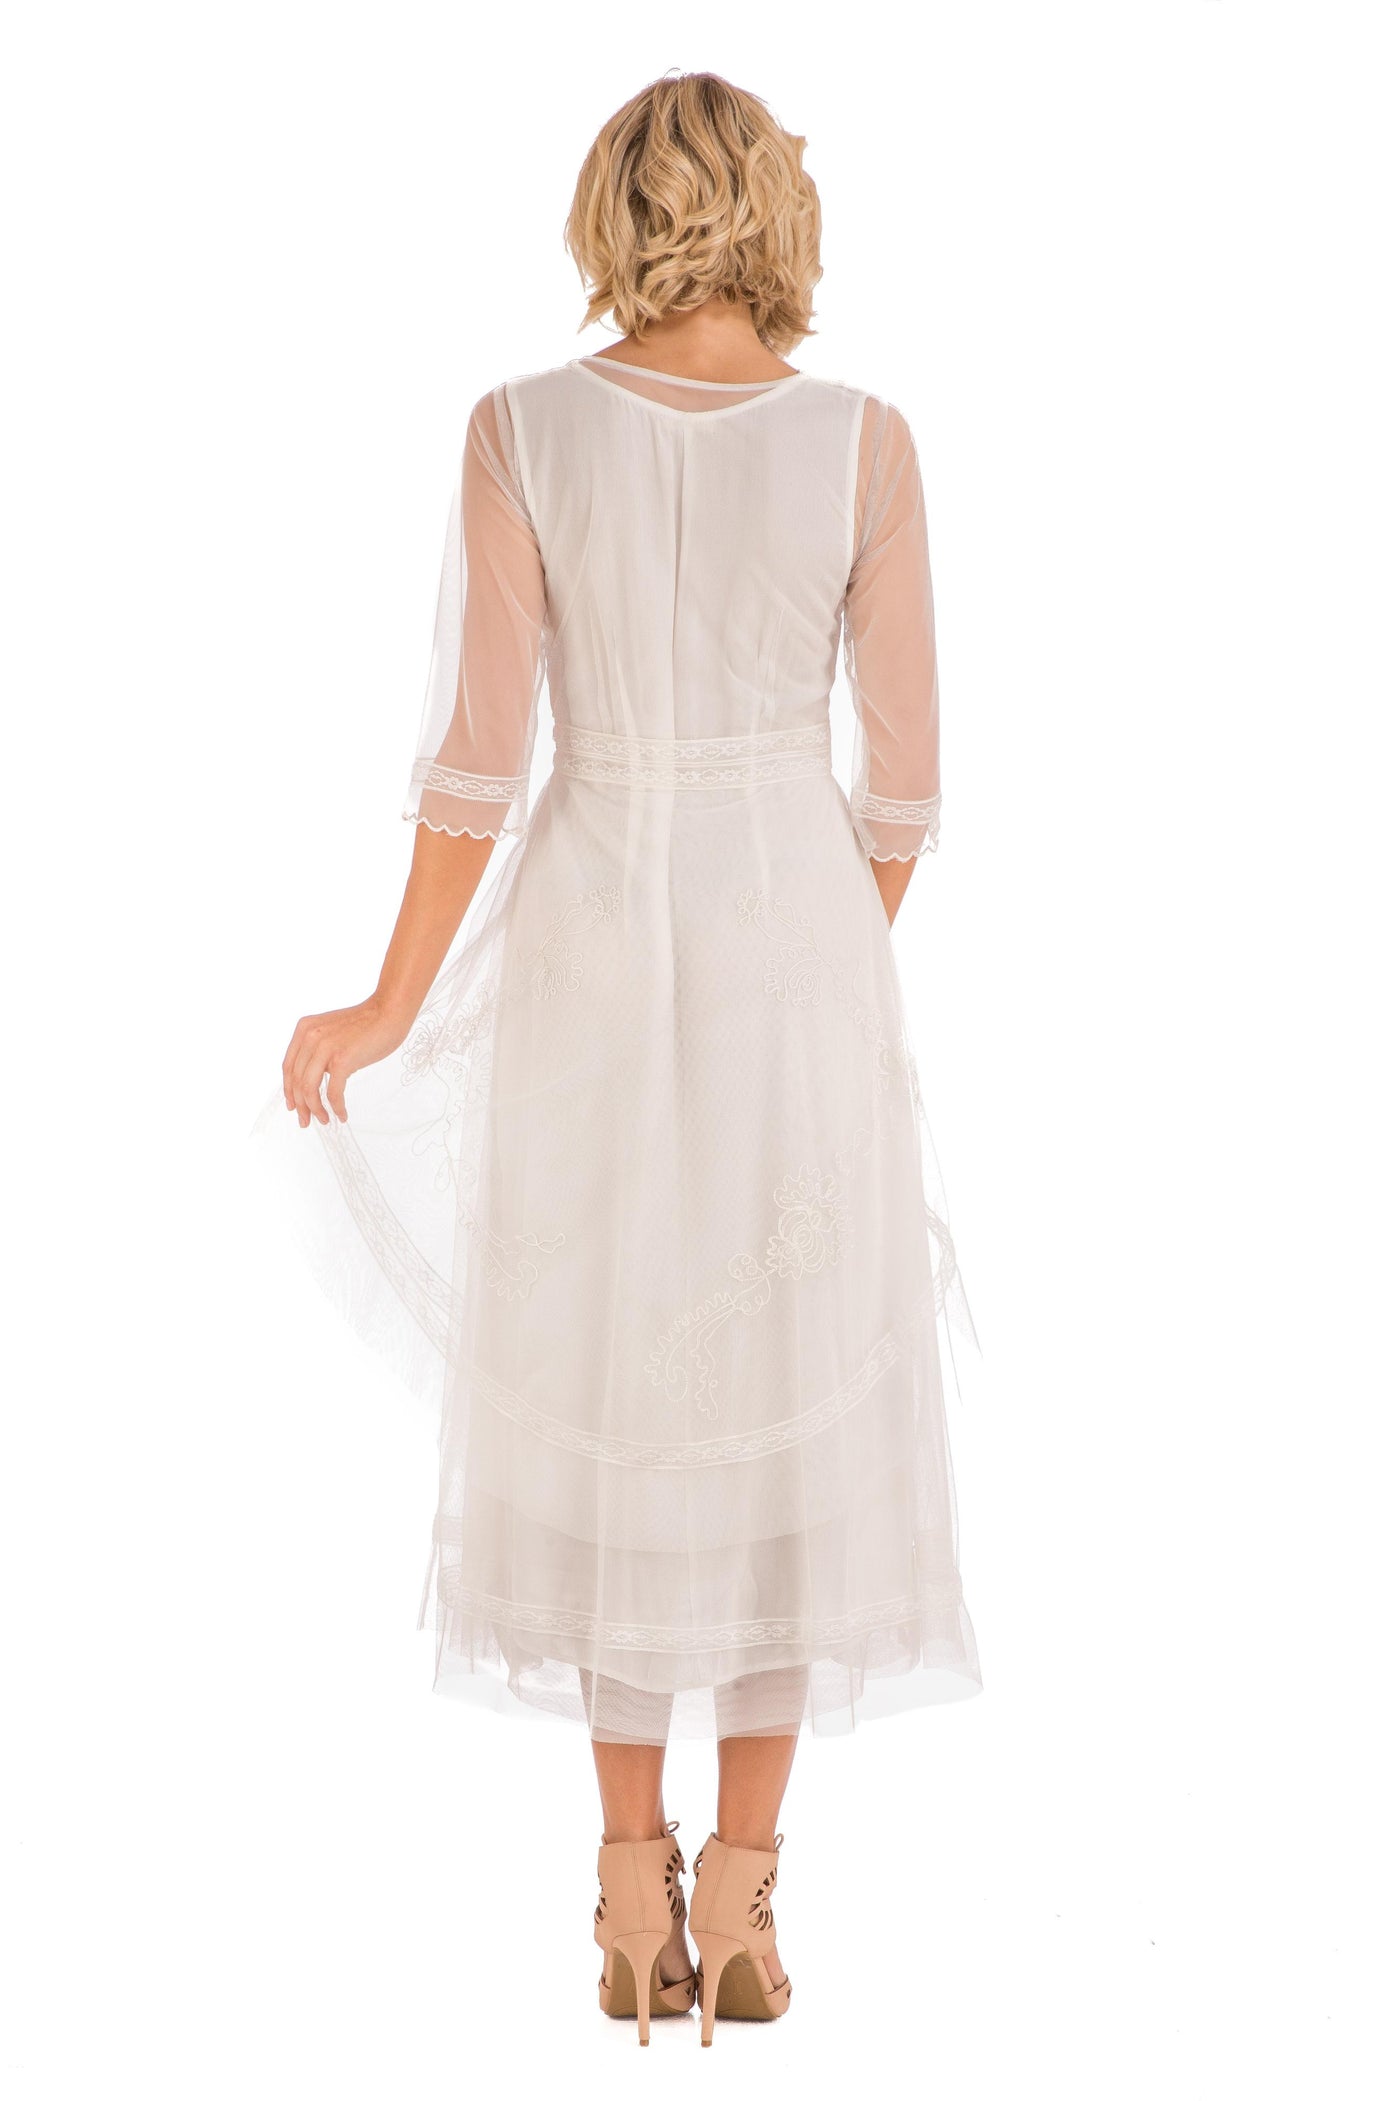 Mary Darling CL-163 Dress in Ivory by Nataya – WardrobeShop